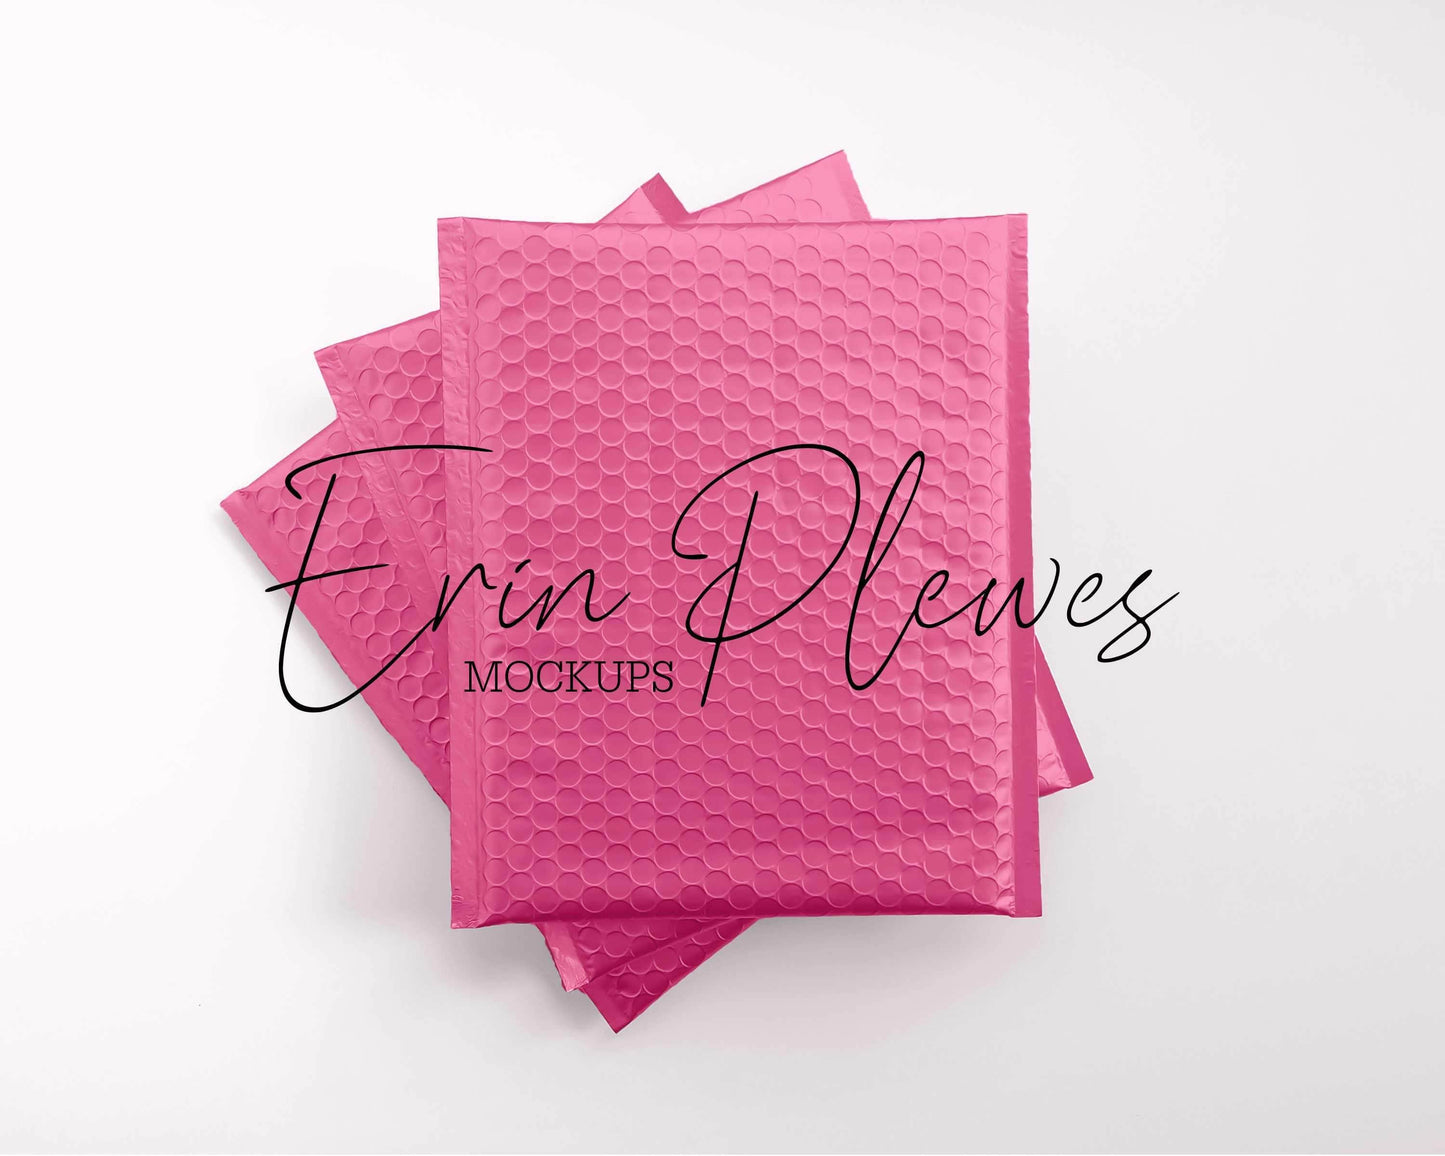 Erin Plewes Mockups Bubble Mailer Mockup Set, Pink Bag Mock Up Flat Lay, Pink Poly Mailer Stock Photo, Jpeg Instant Digital Download Template